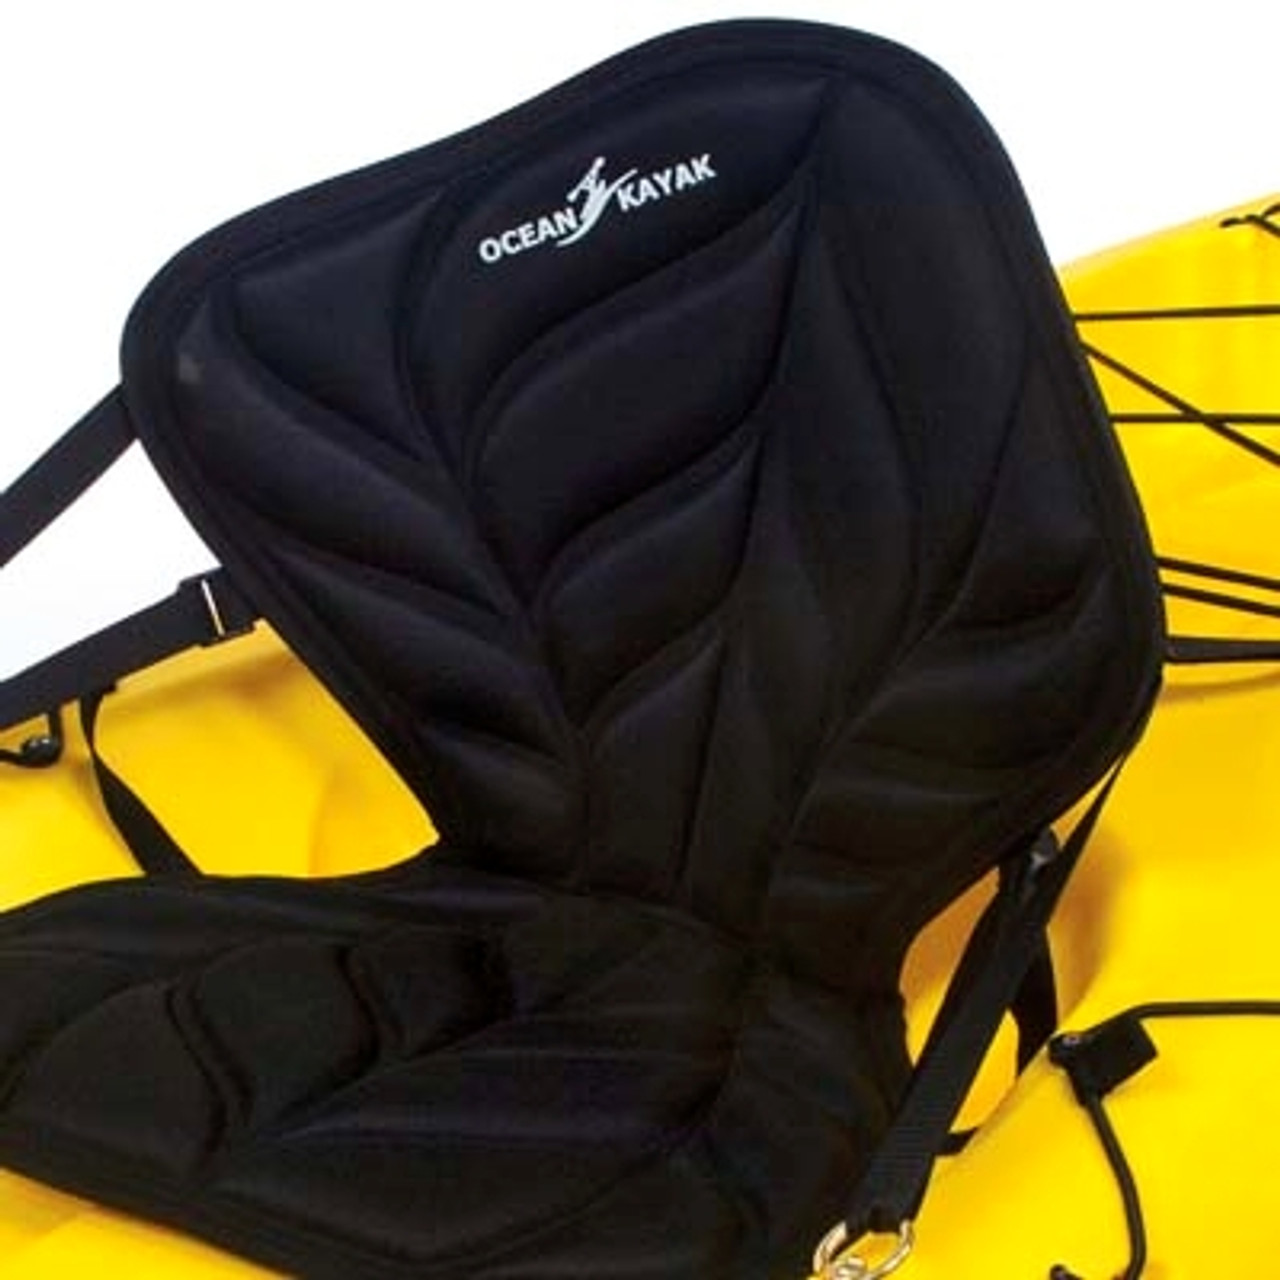 New New Ocean Kayak Comfort Tech Seat Back 